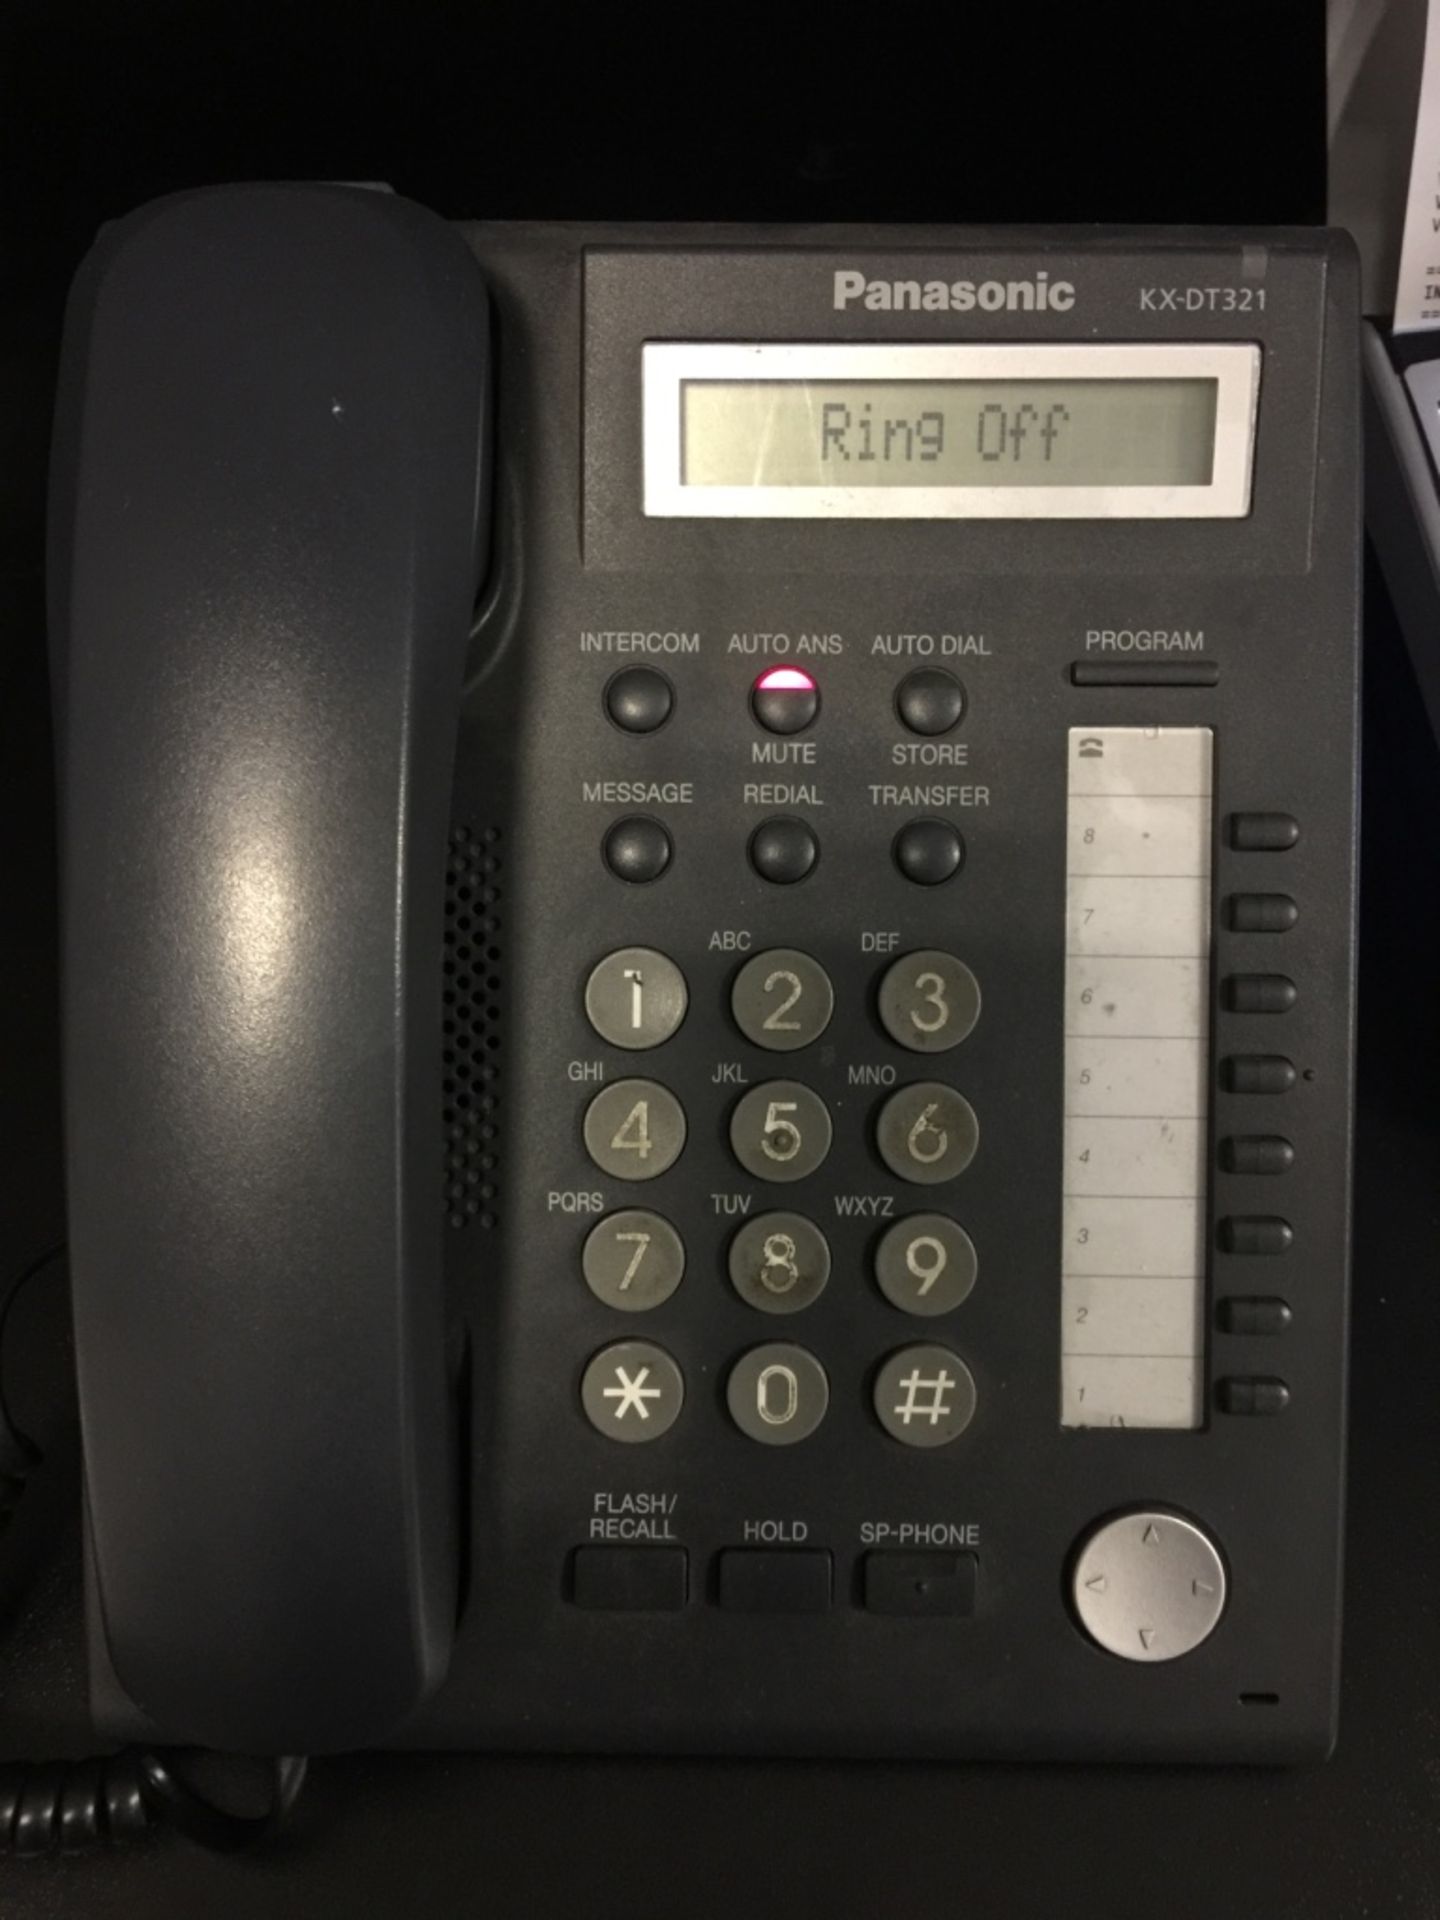 Panasonic KX - TDE200 IP PBX, with PSLP 1433 Power Supply, Serial No. OKCUF700103 Digital Phone - Image 5 of 8